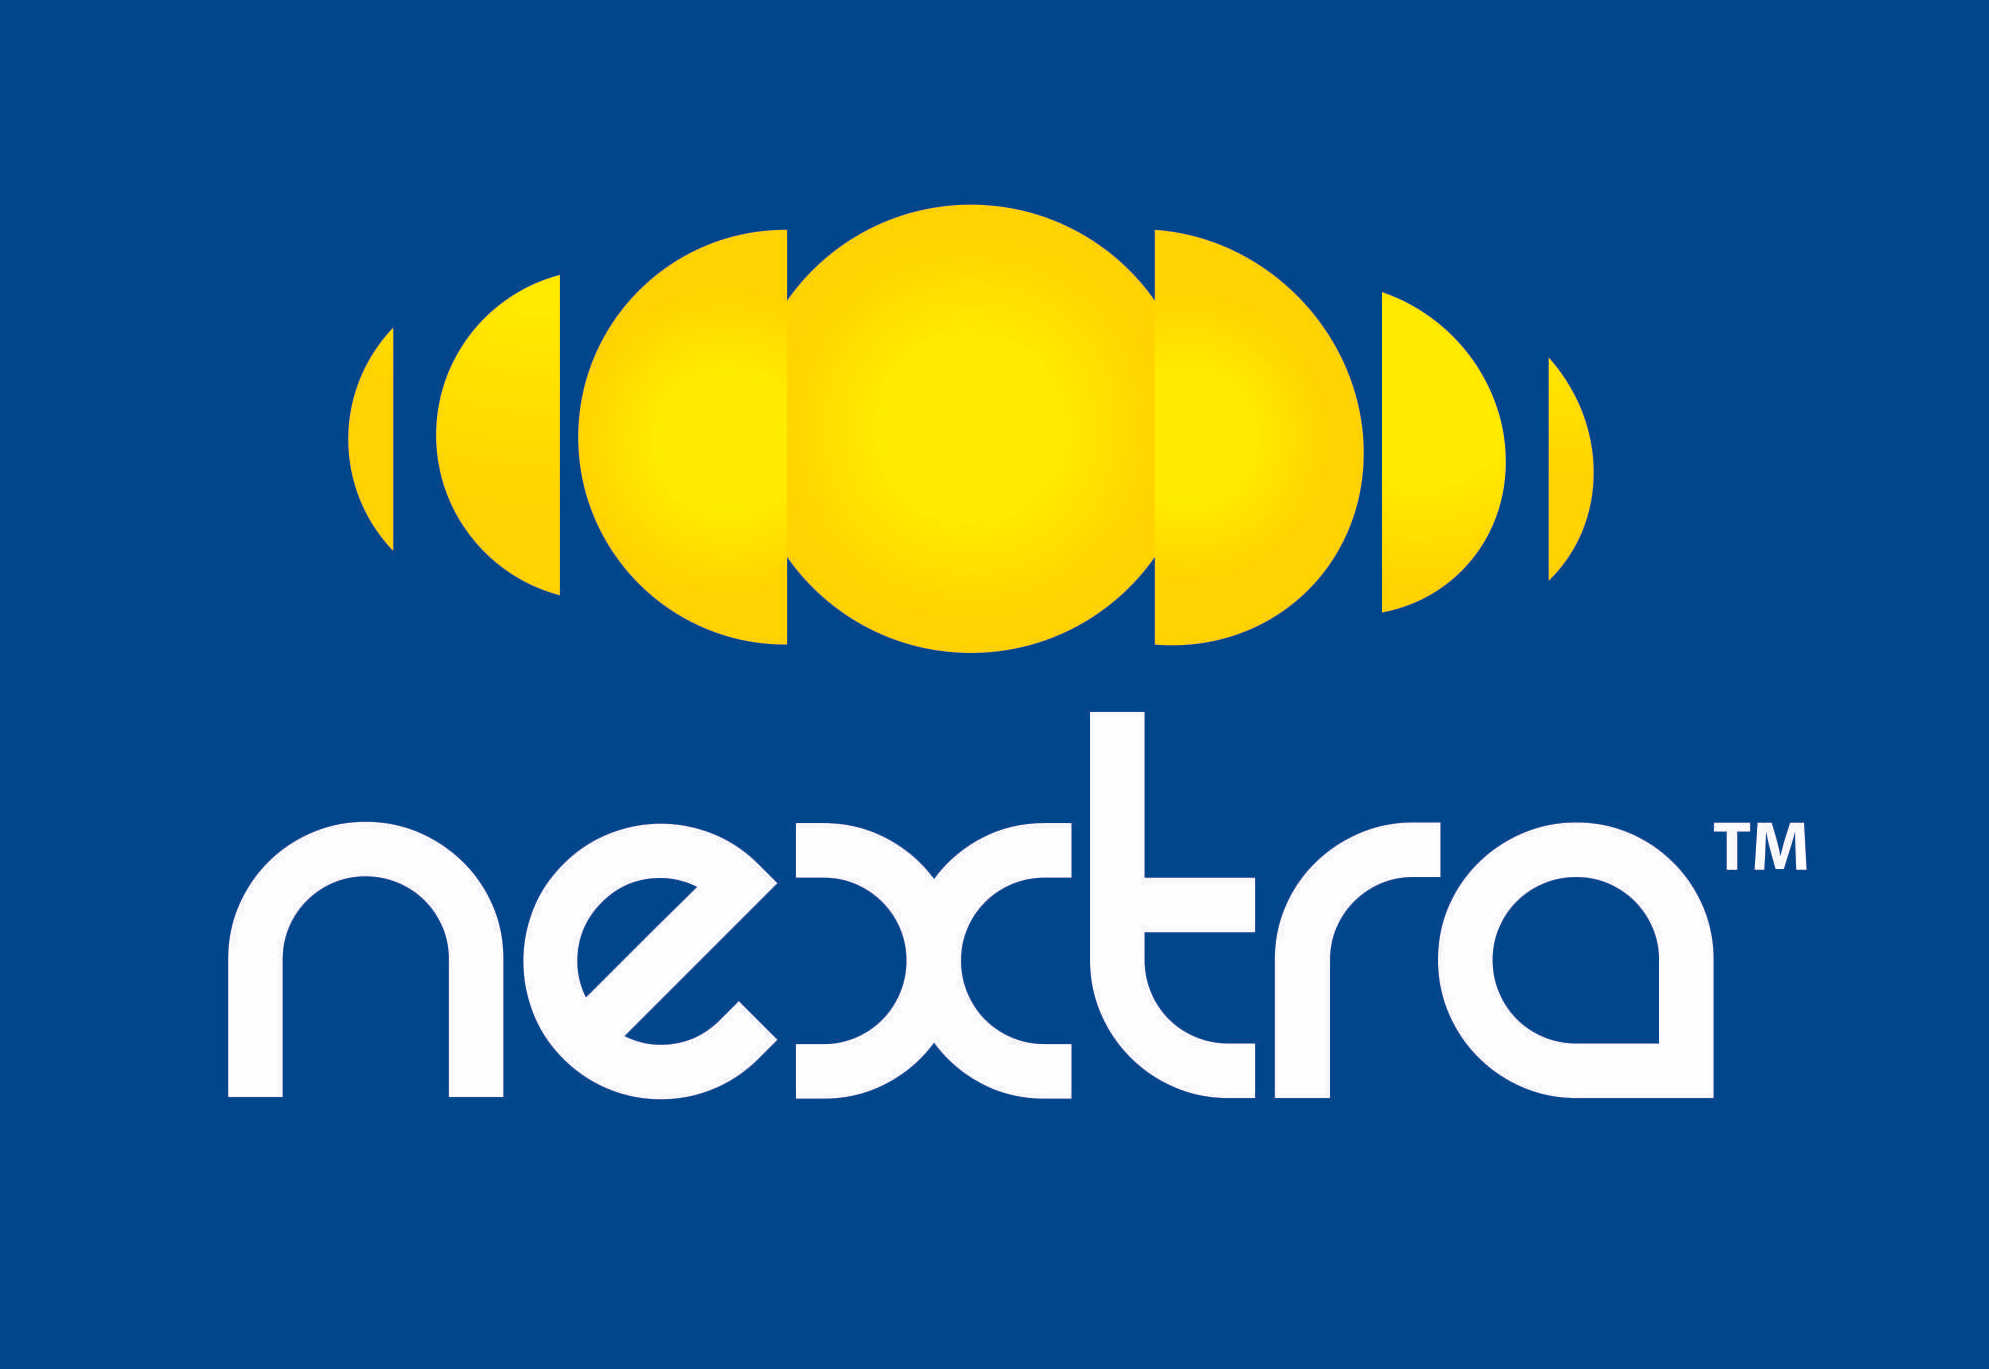 Nextra Broadband is an Ultra-High Speed broadband service